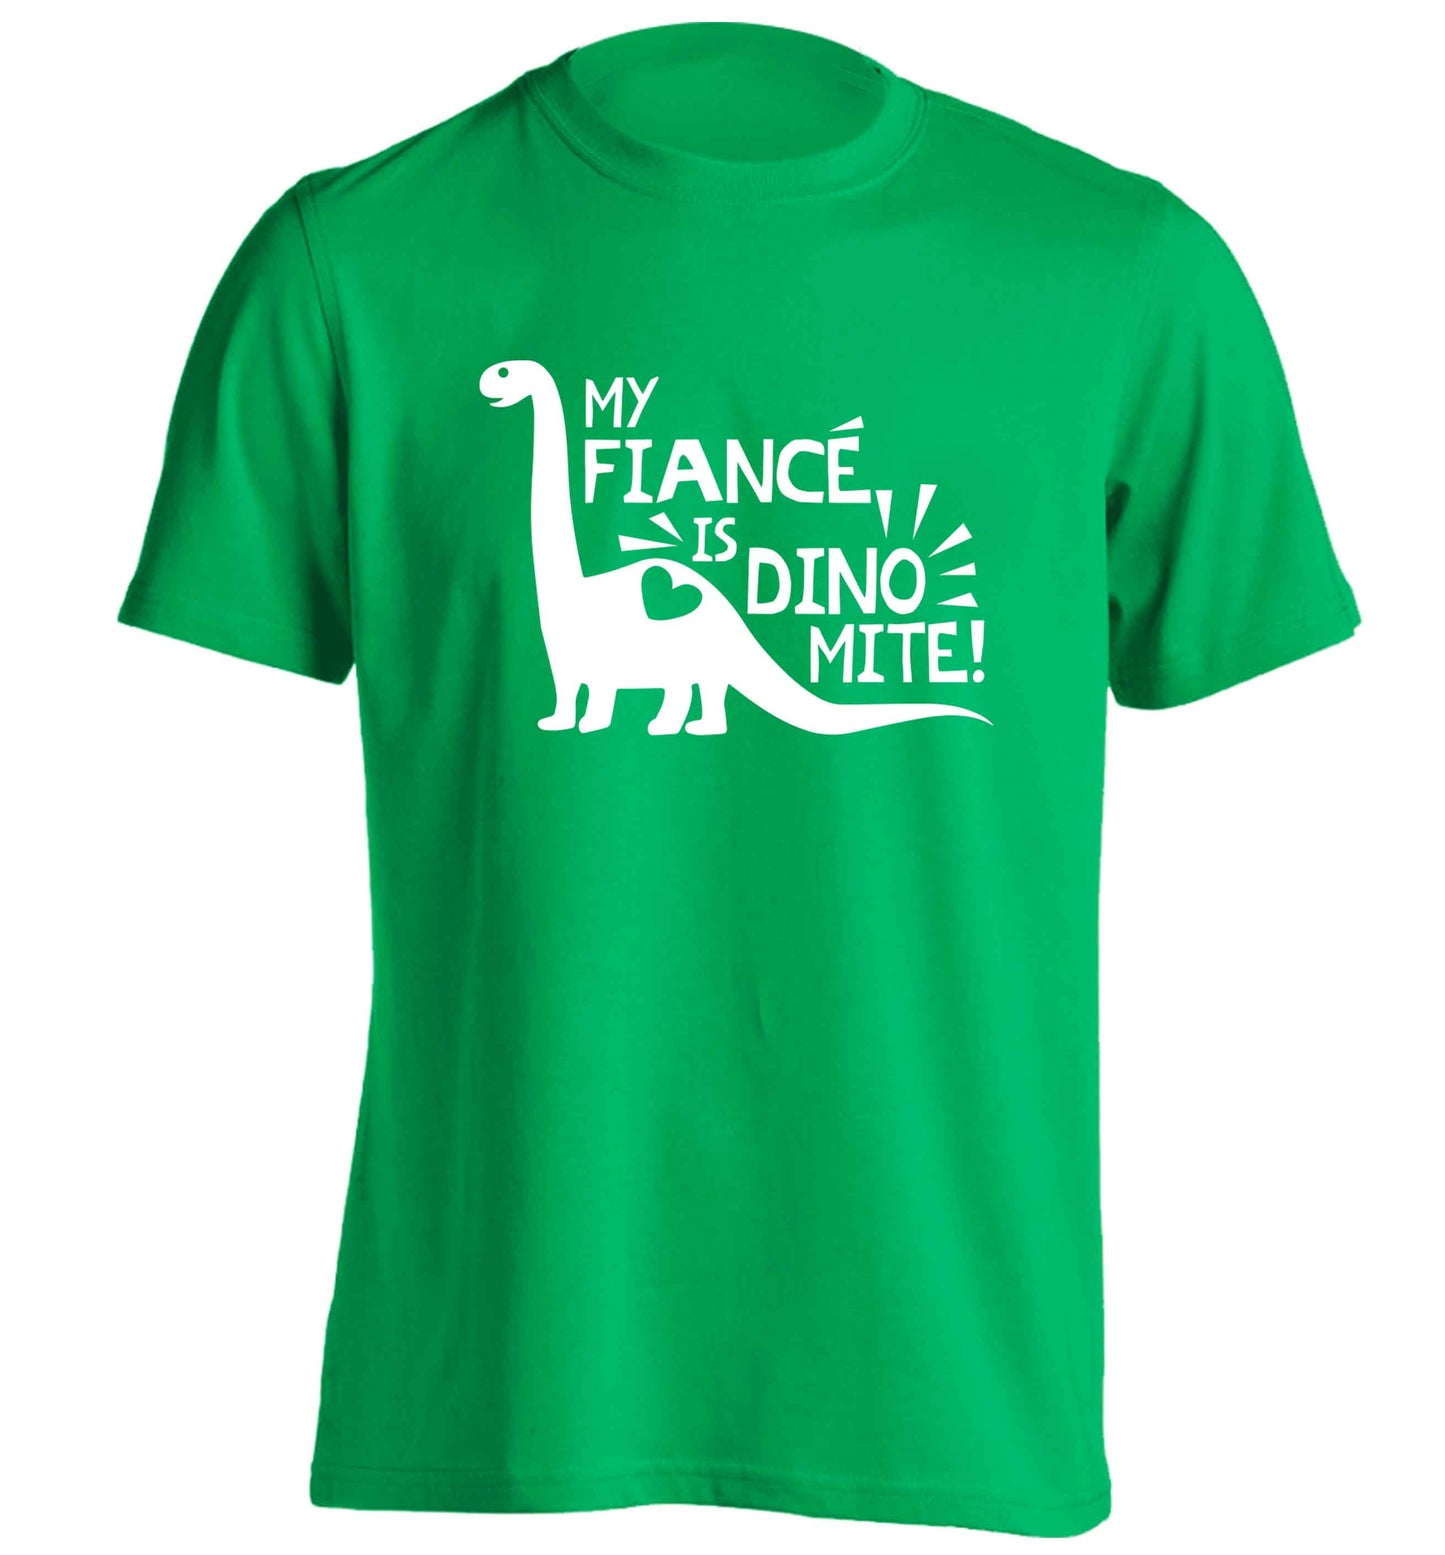 My fiance is dinomite! adults unisex green Tshirt 2XL